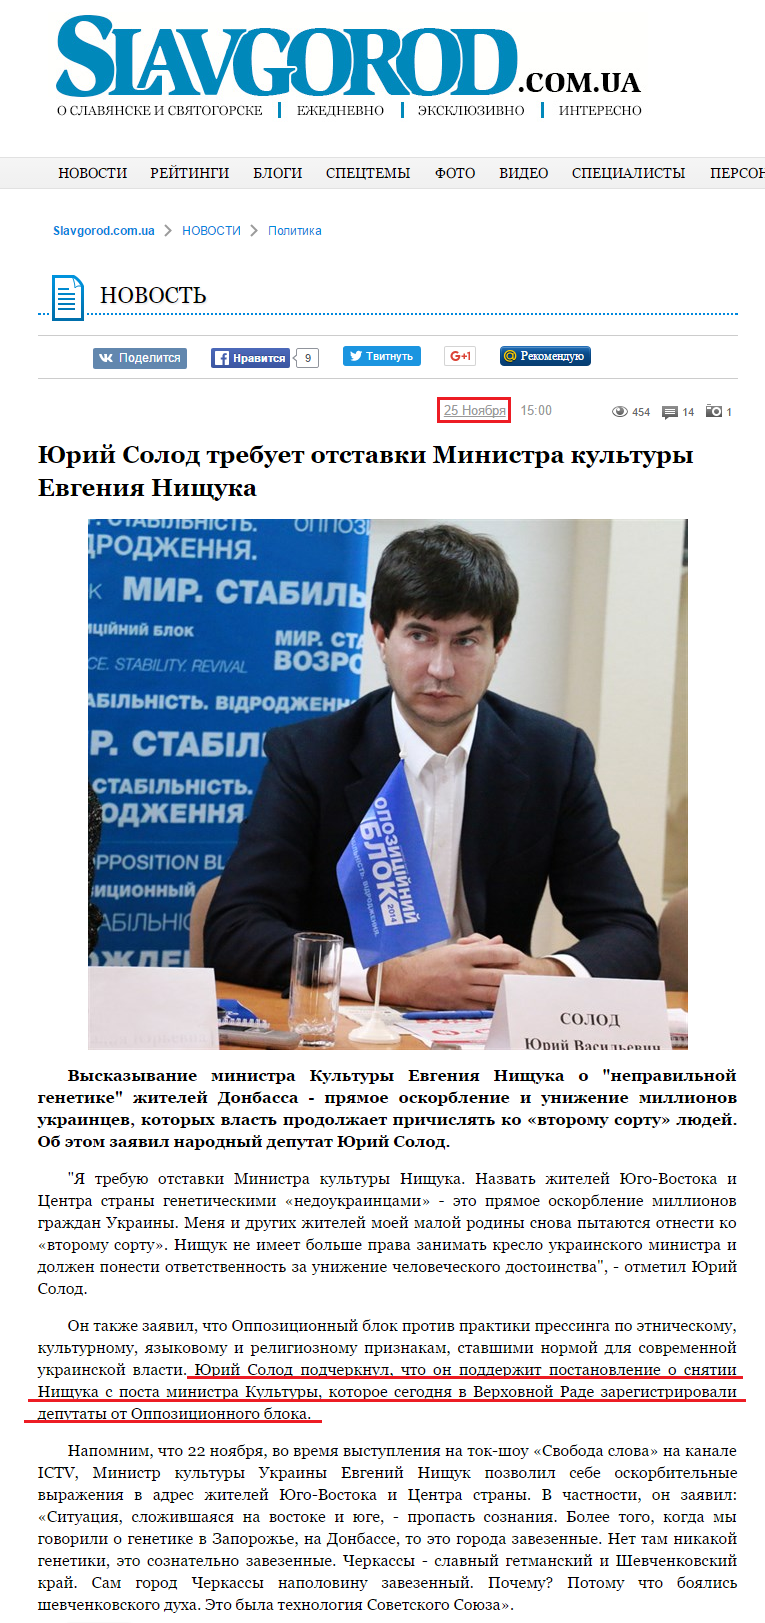 http://slavgorod.com.ua/News/Article/11023